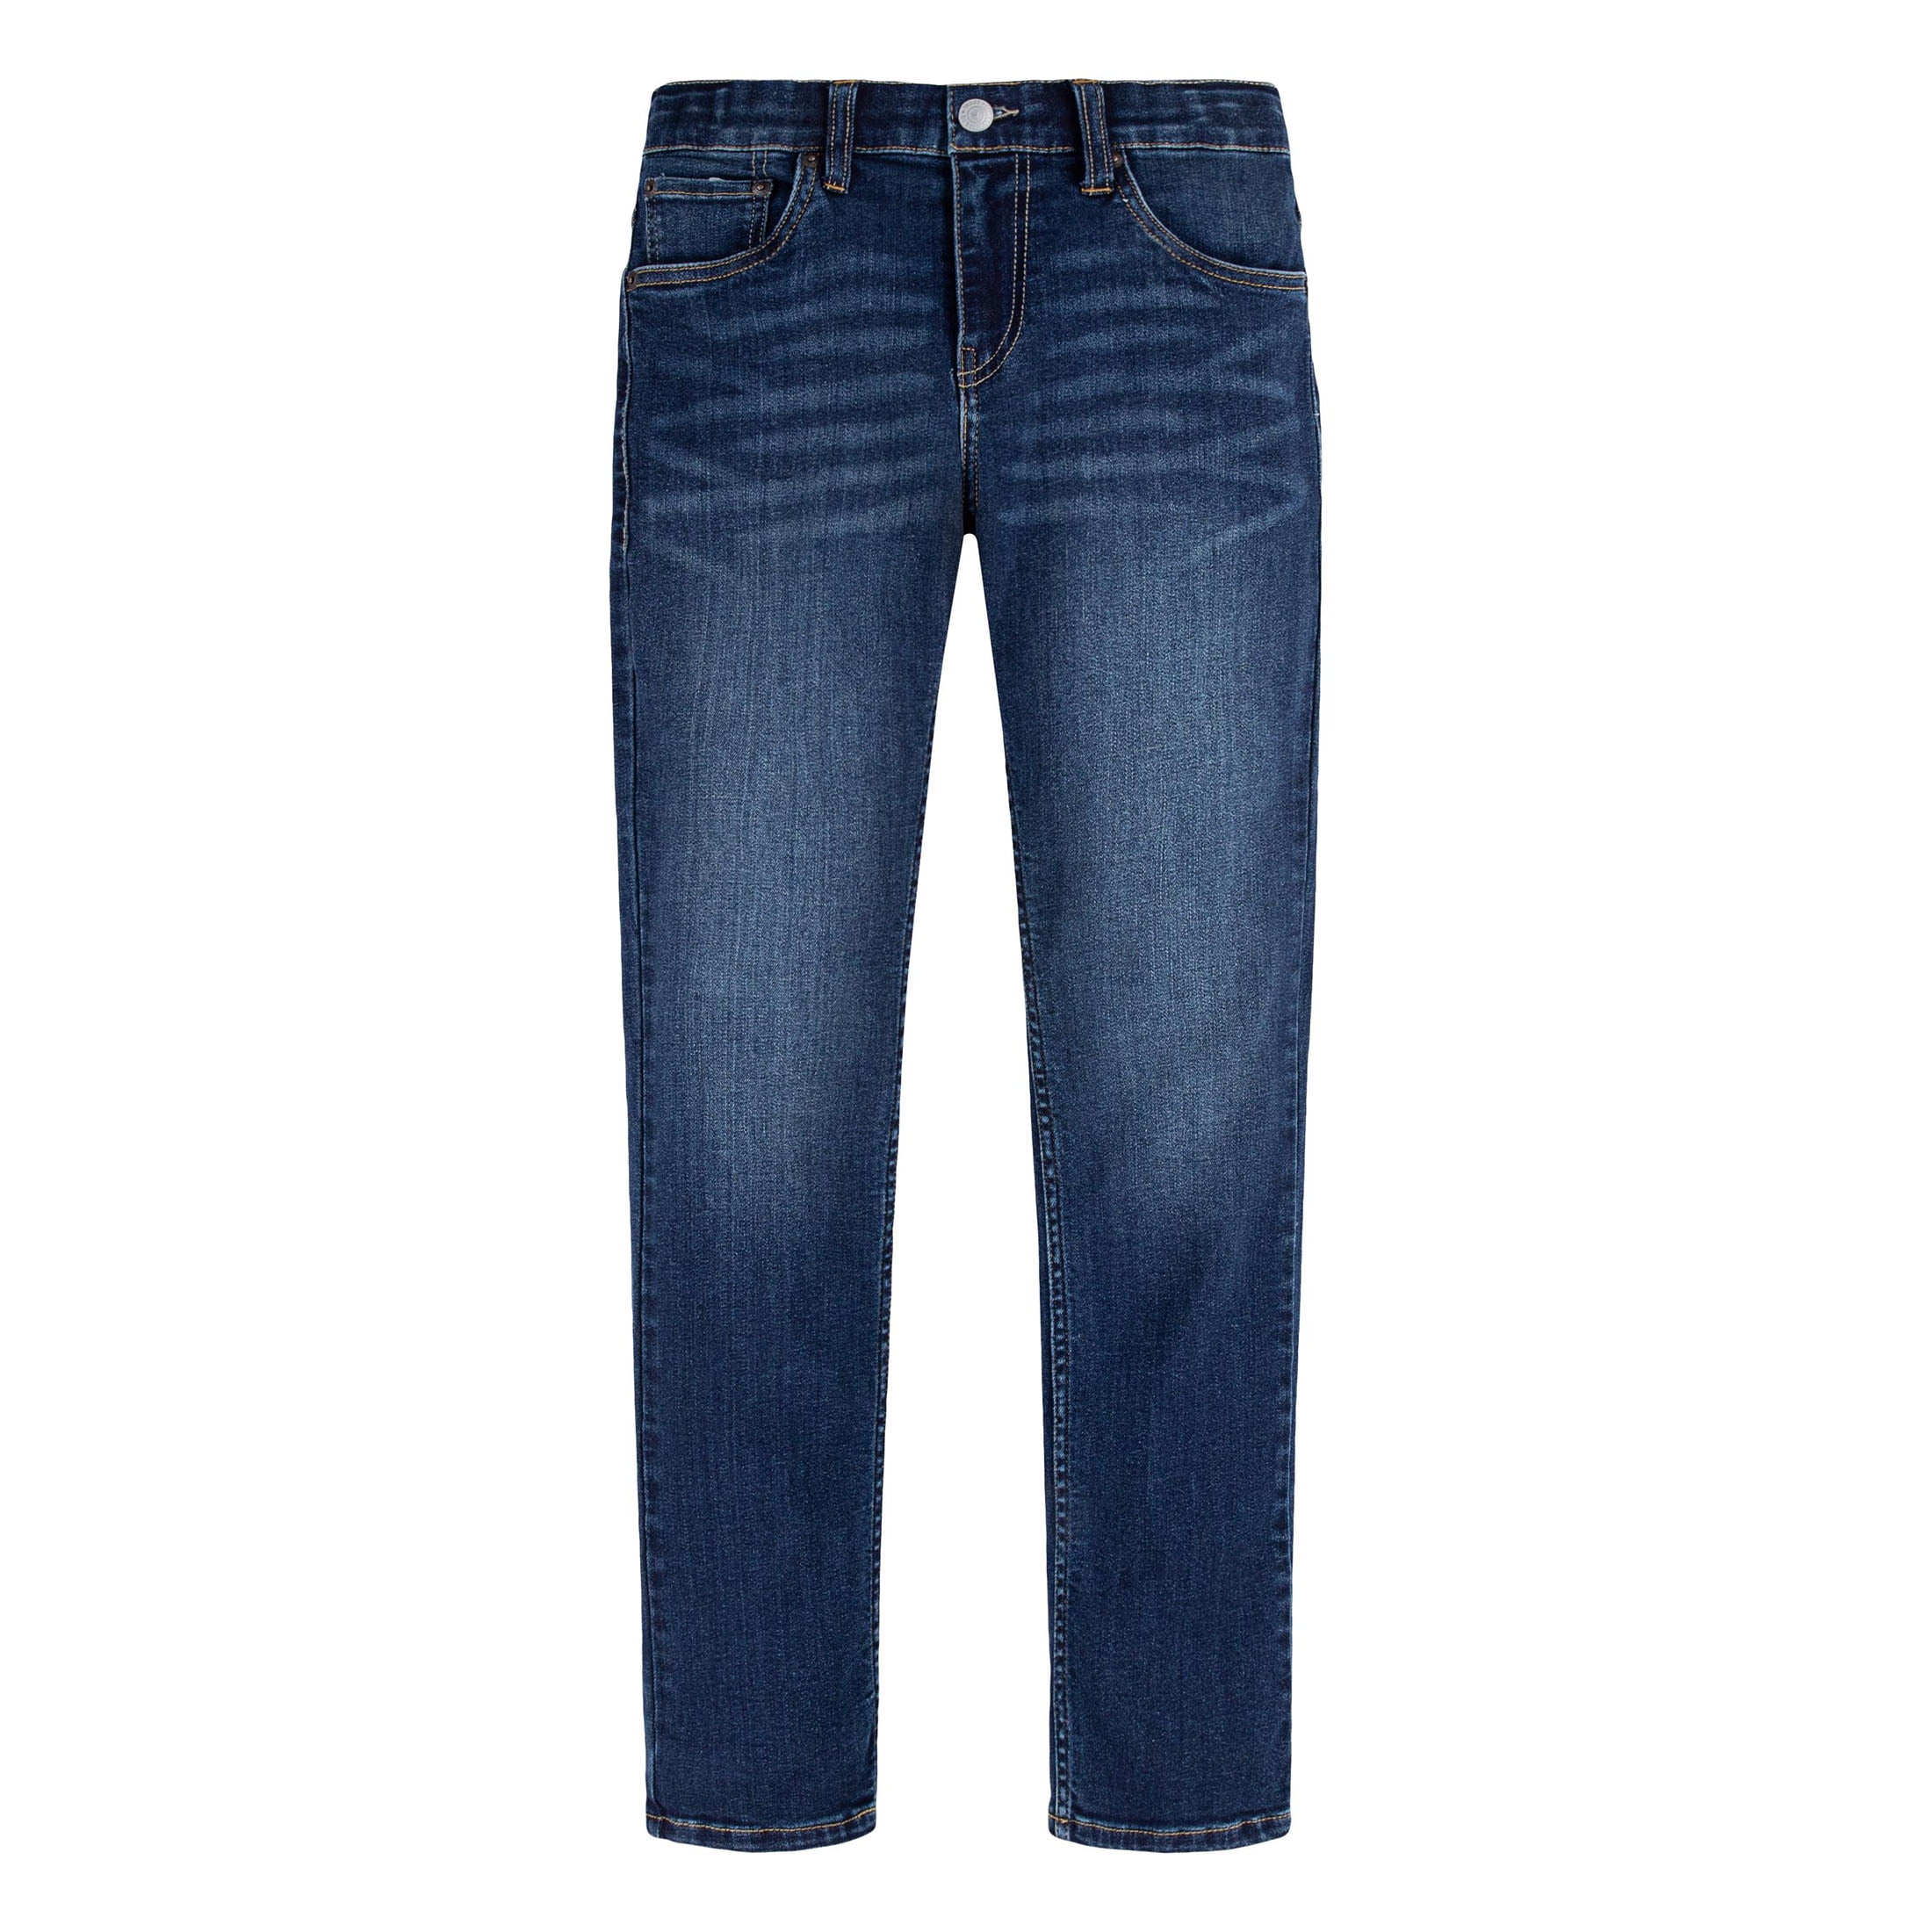 Levi's Boys' 511 Slim Fit Performance Jeans, Sizes 4-20 - Walmart.com